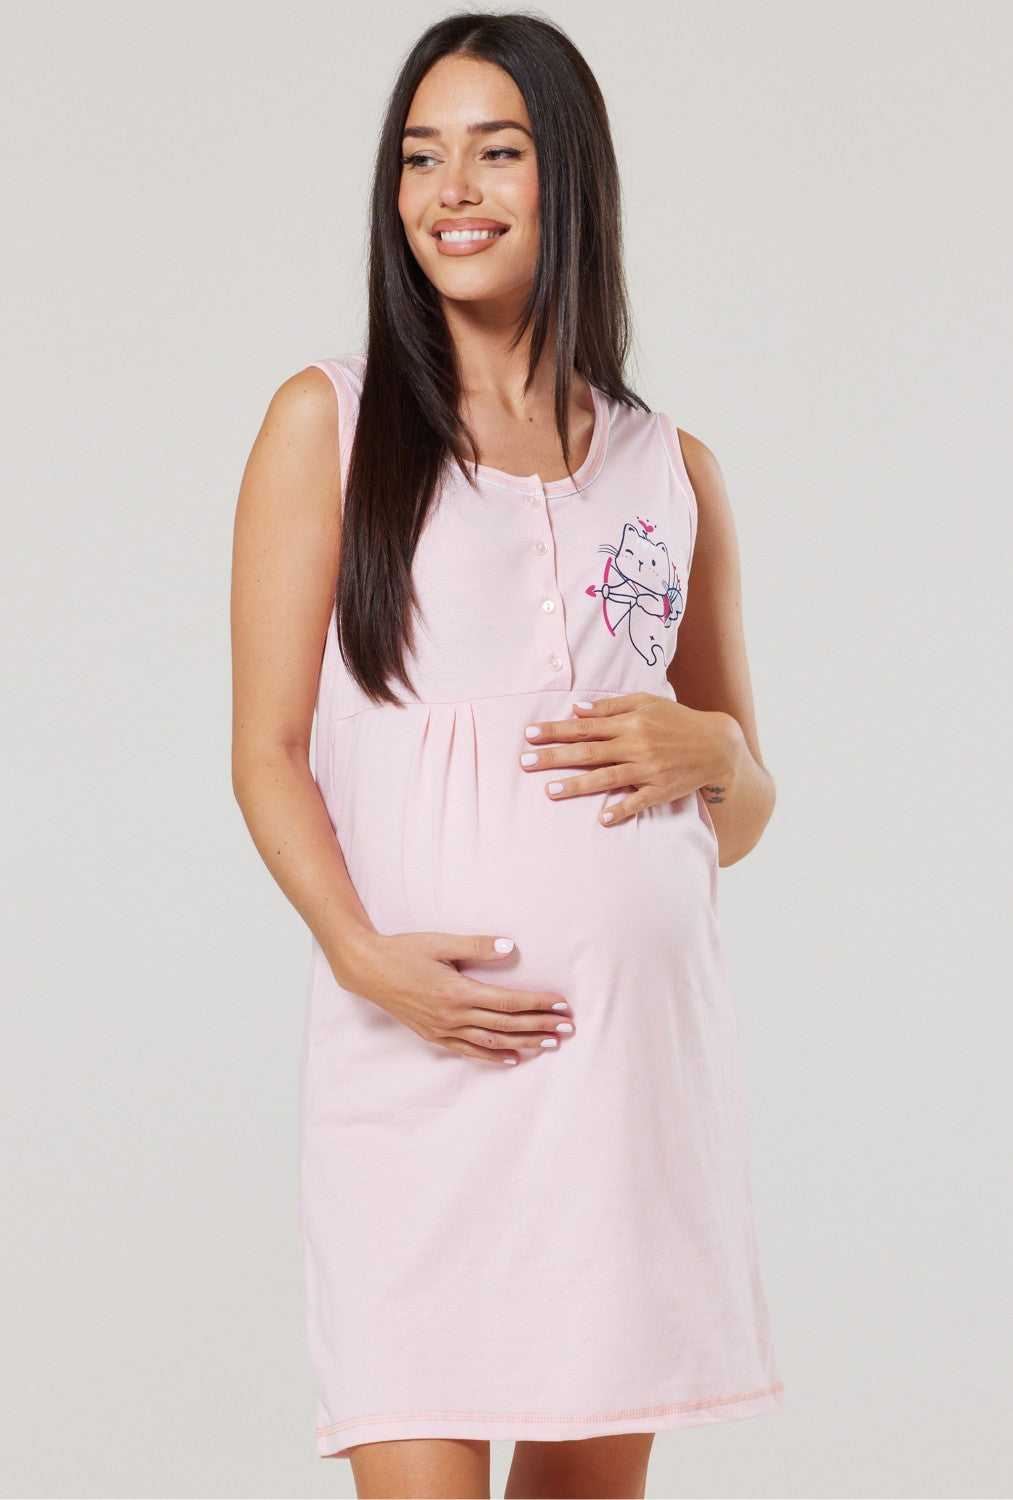 Maternity Hospital Gown Robe Nightie Set Labour & Birth